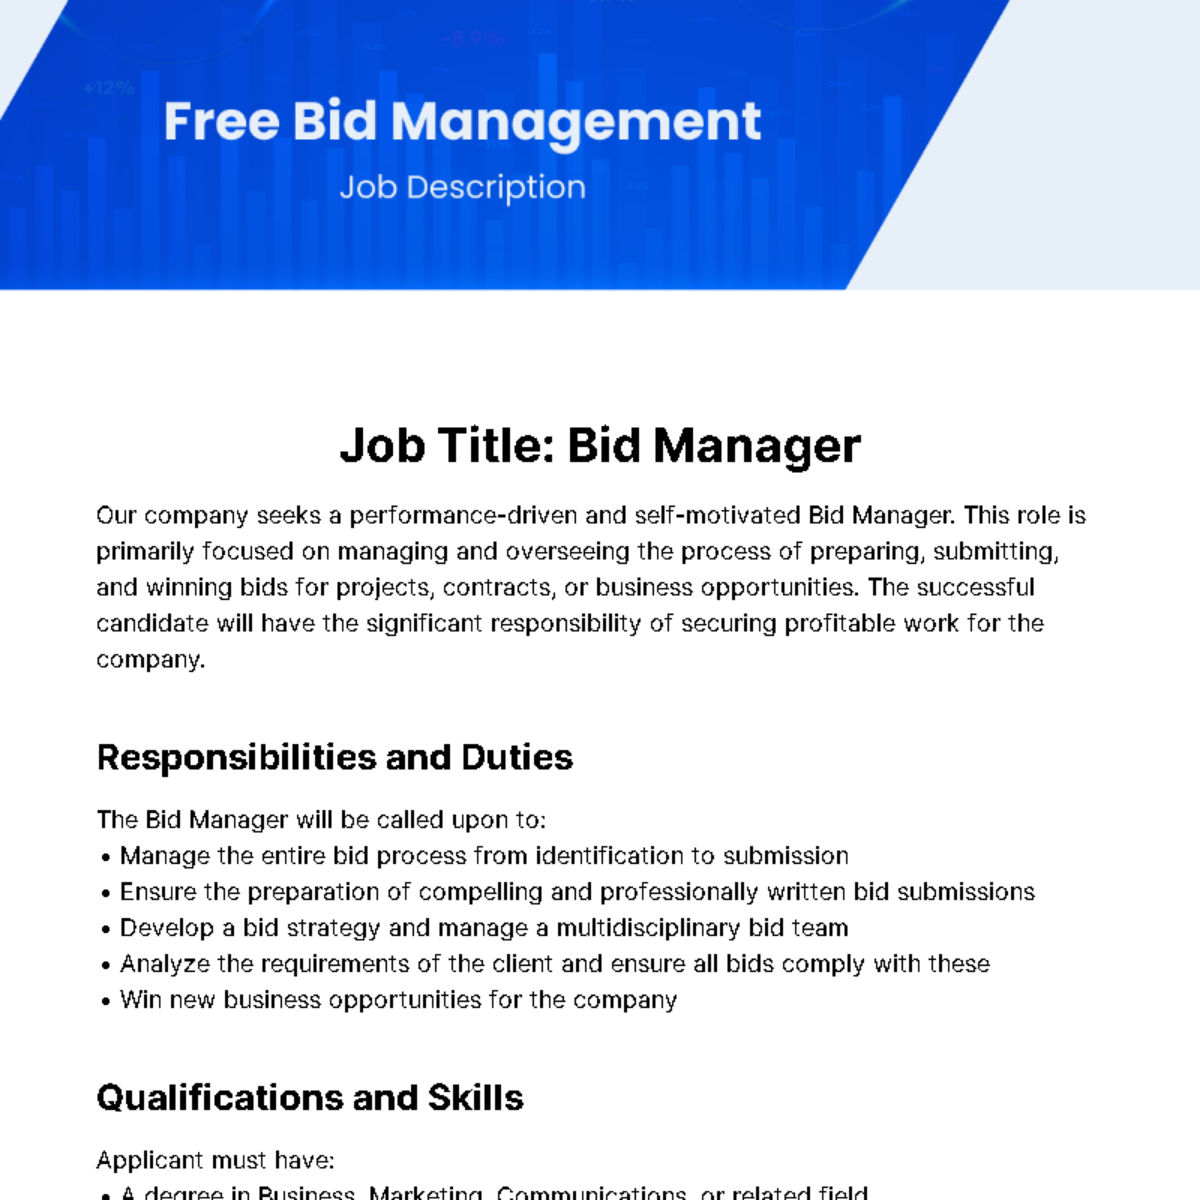 Free Bid Management Job Description Template